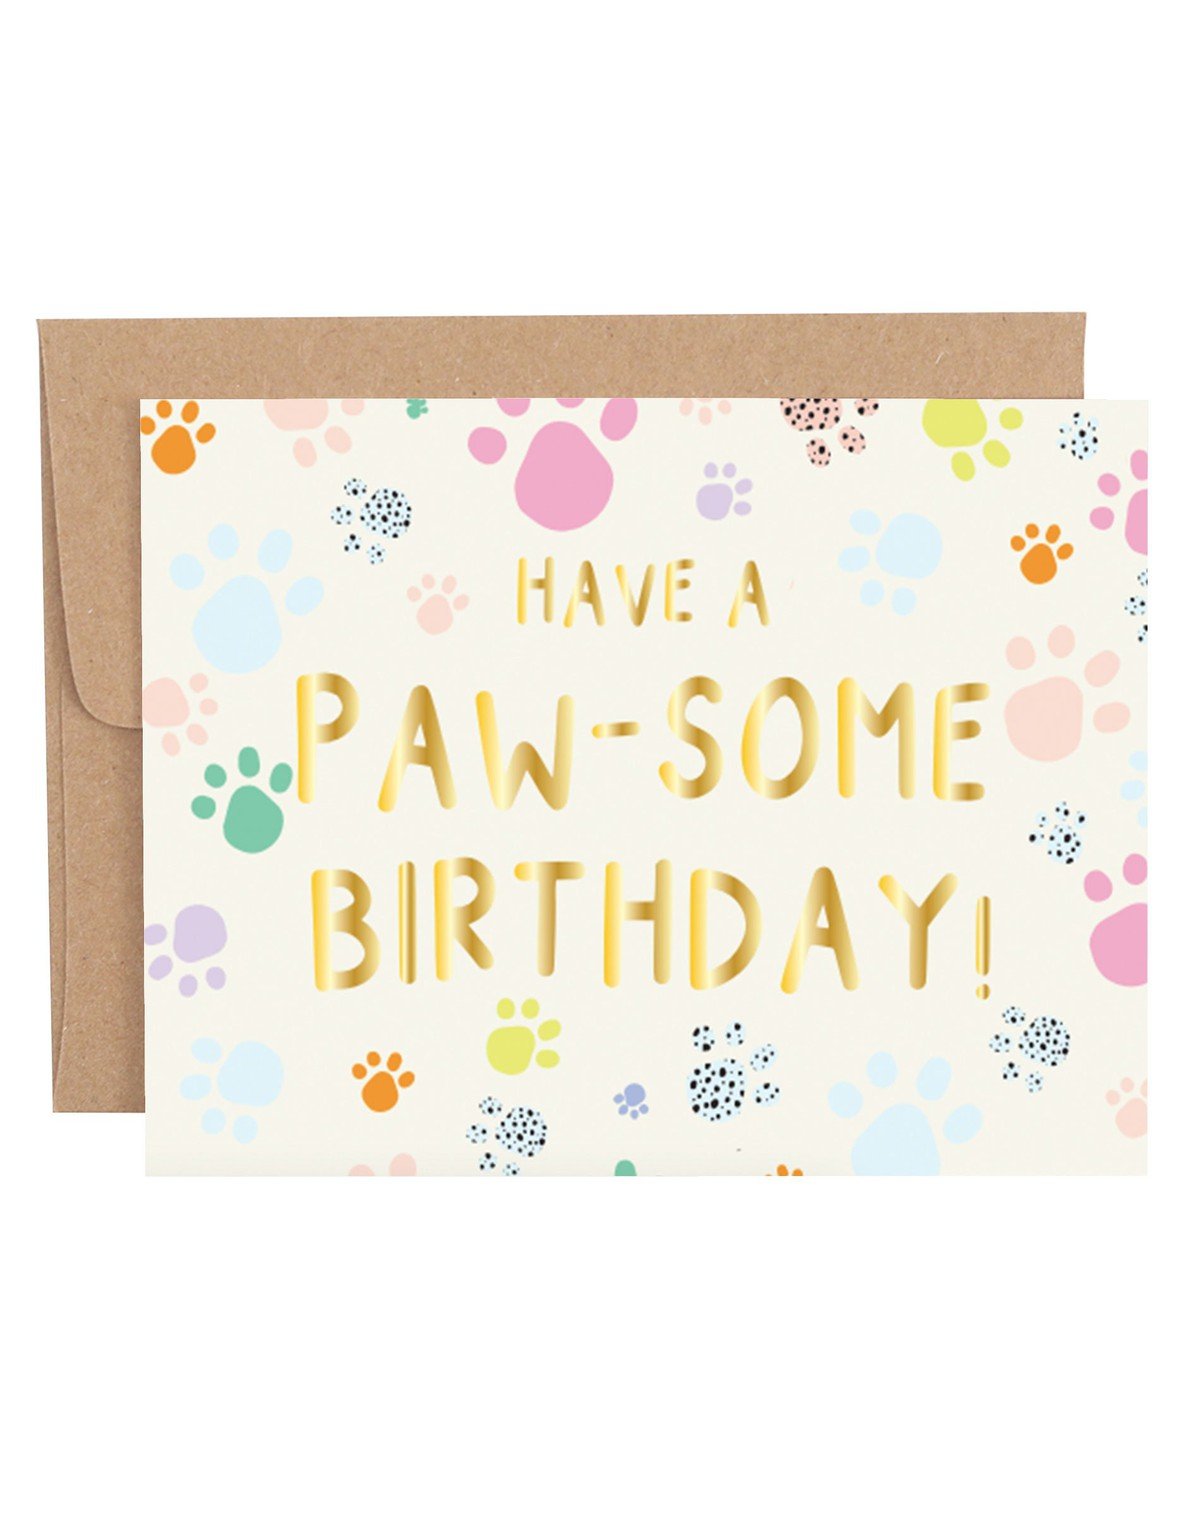 Pawsome Birthday Greeting Card item